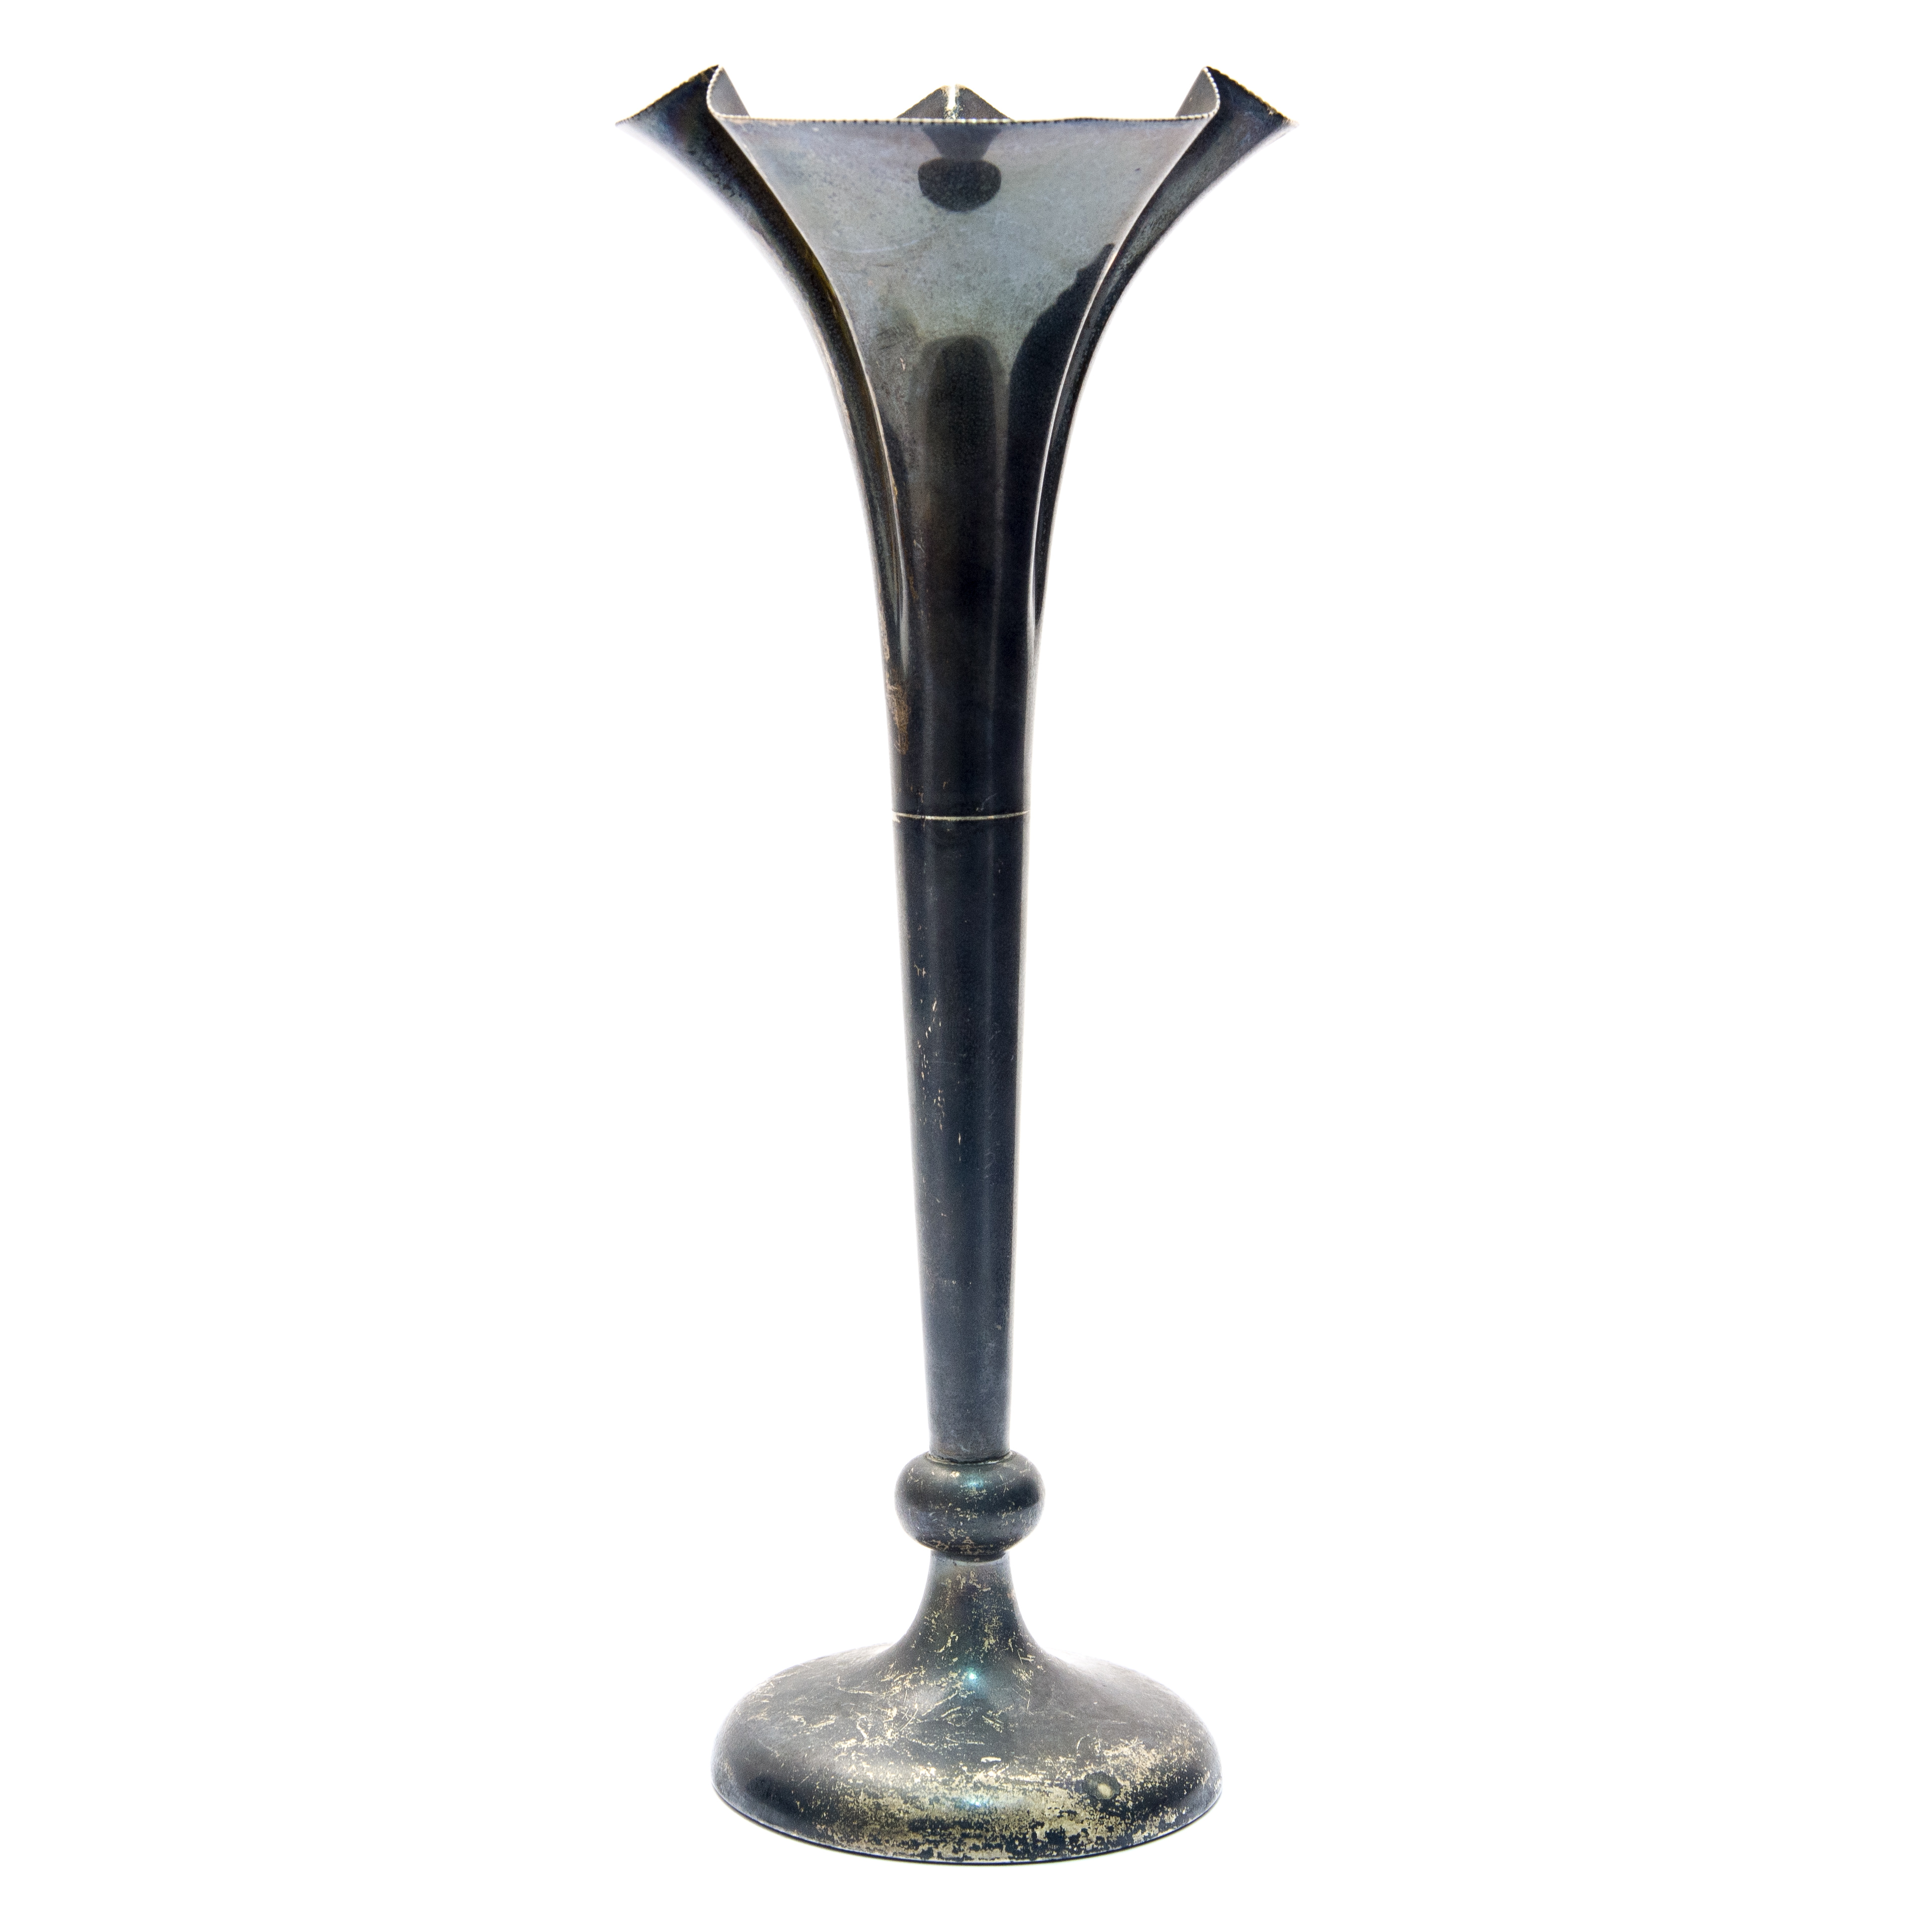 An Arts and Crafts, Art Nouveau style silver trumpet vase,